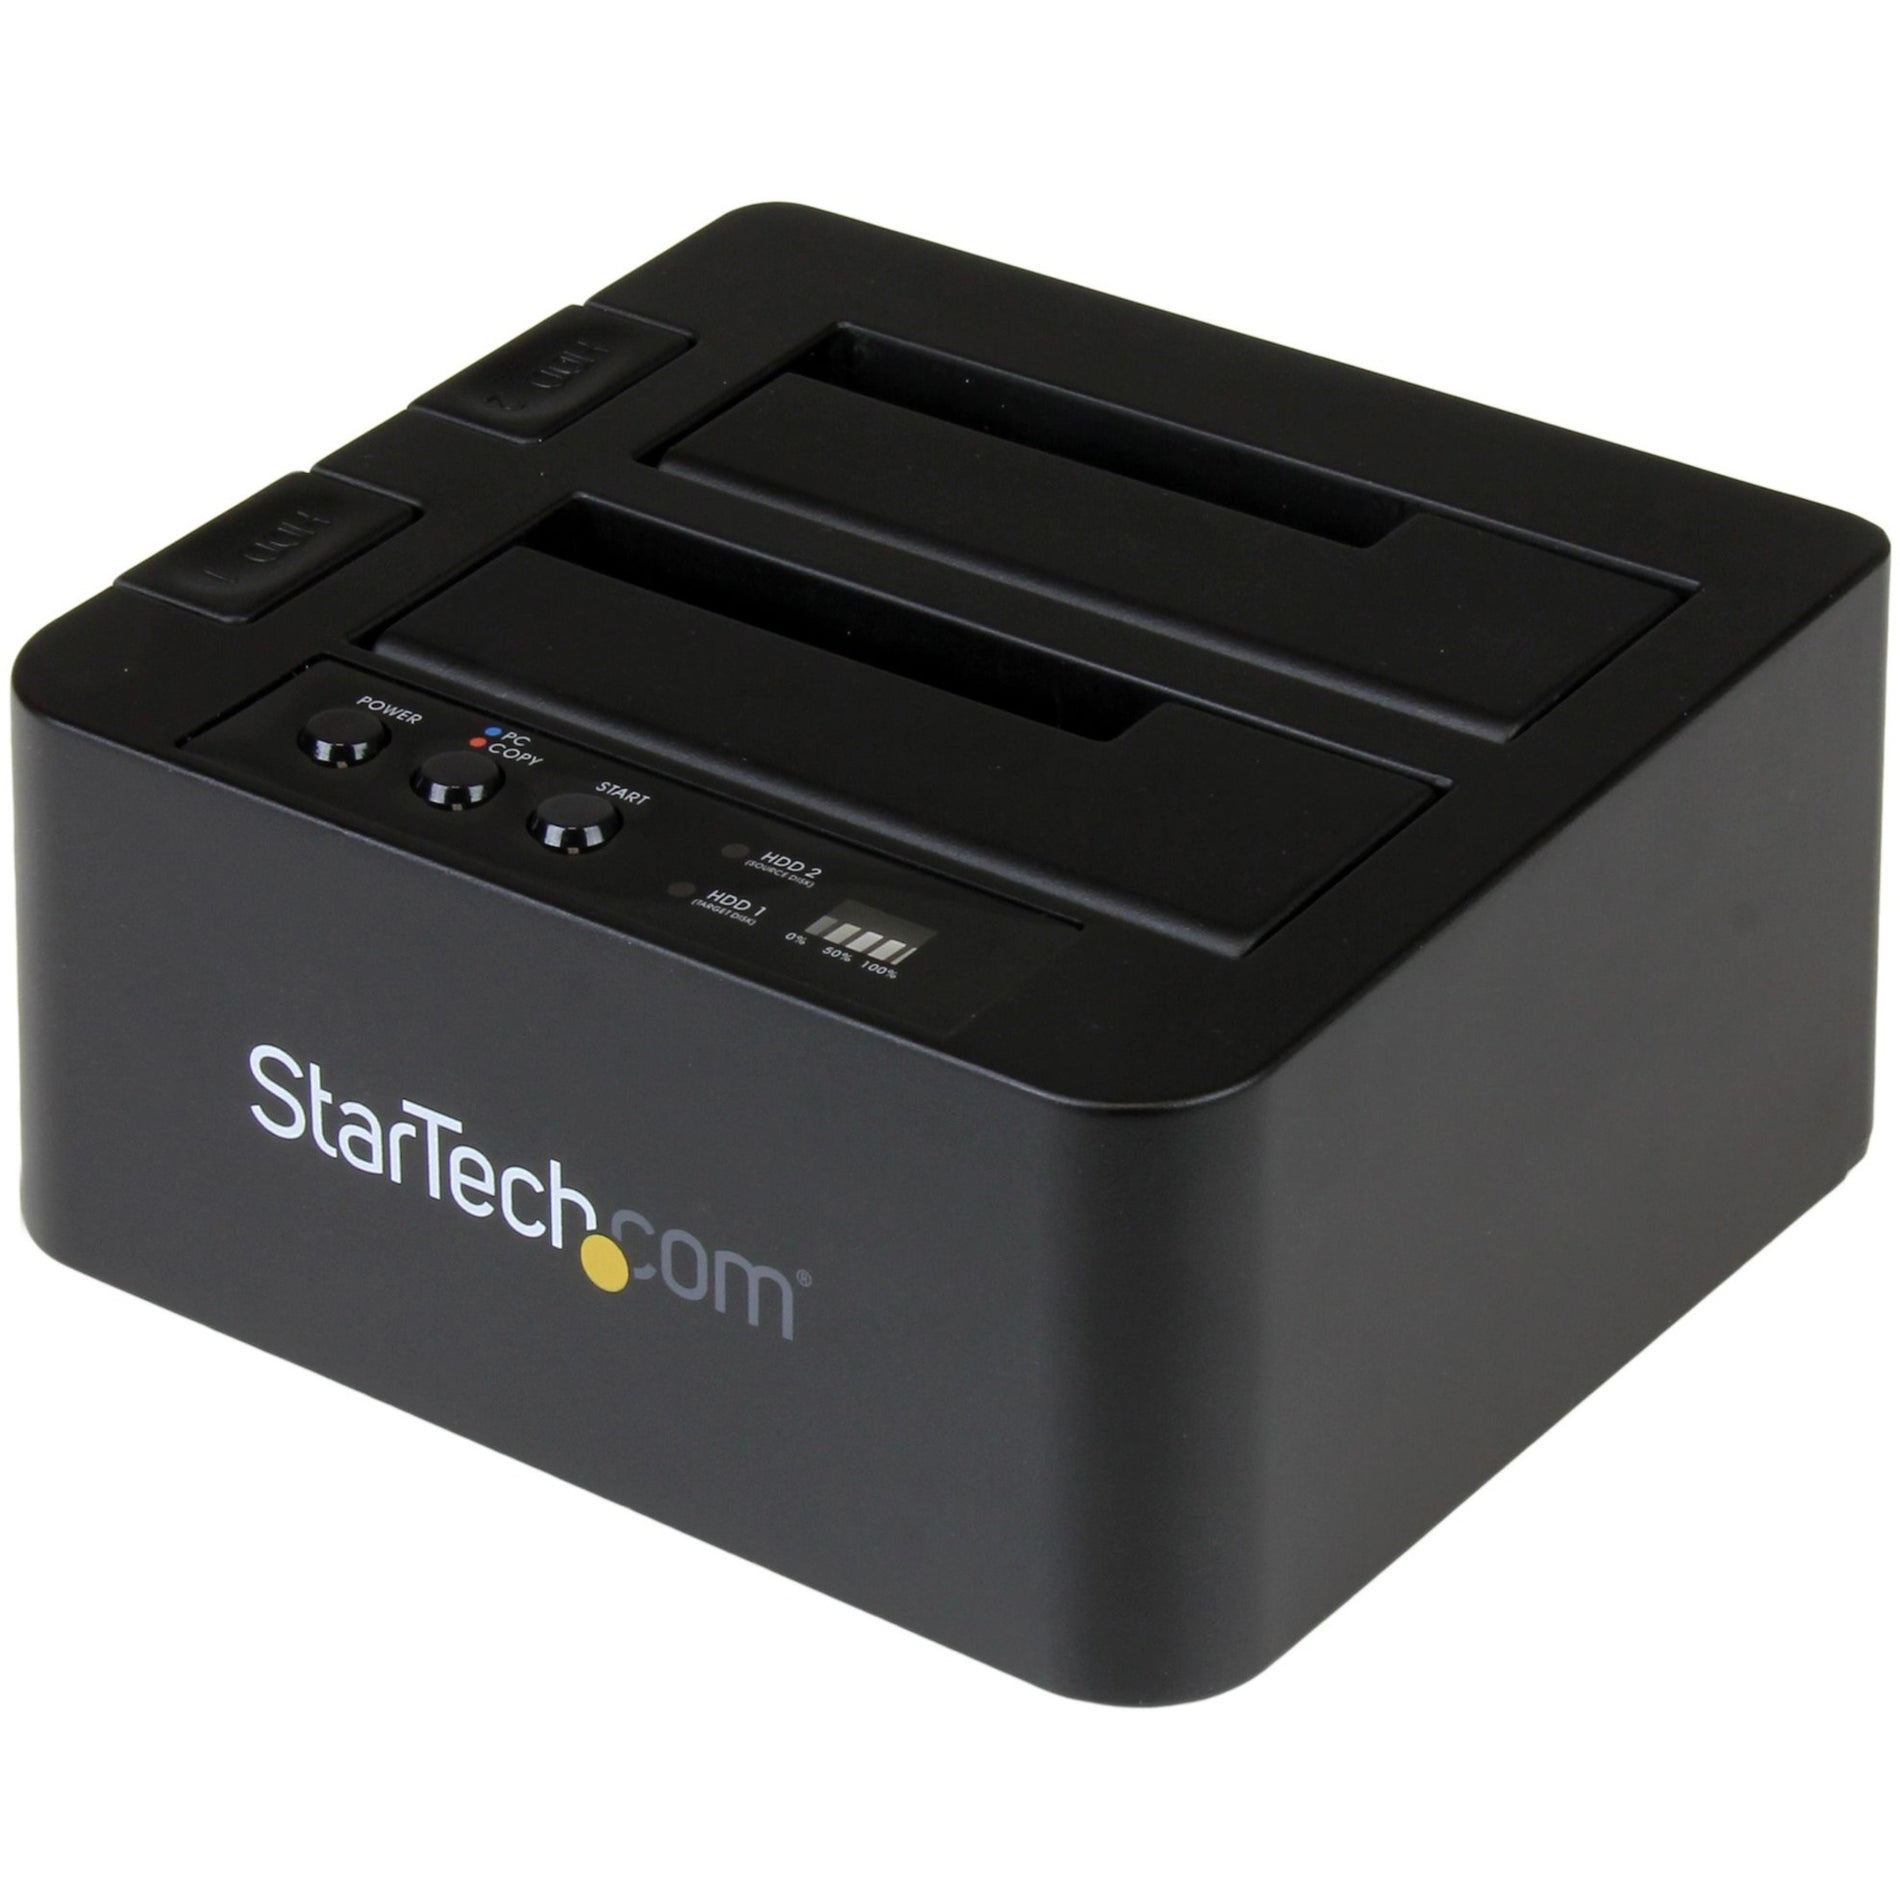 StarTech.com SDOCK2U313R USB 3.1 Duplicator Docking Station, Standalone SATA SSD/HDD Duplication up to 28GB/min